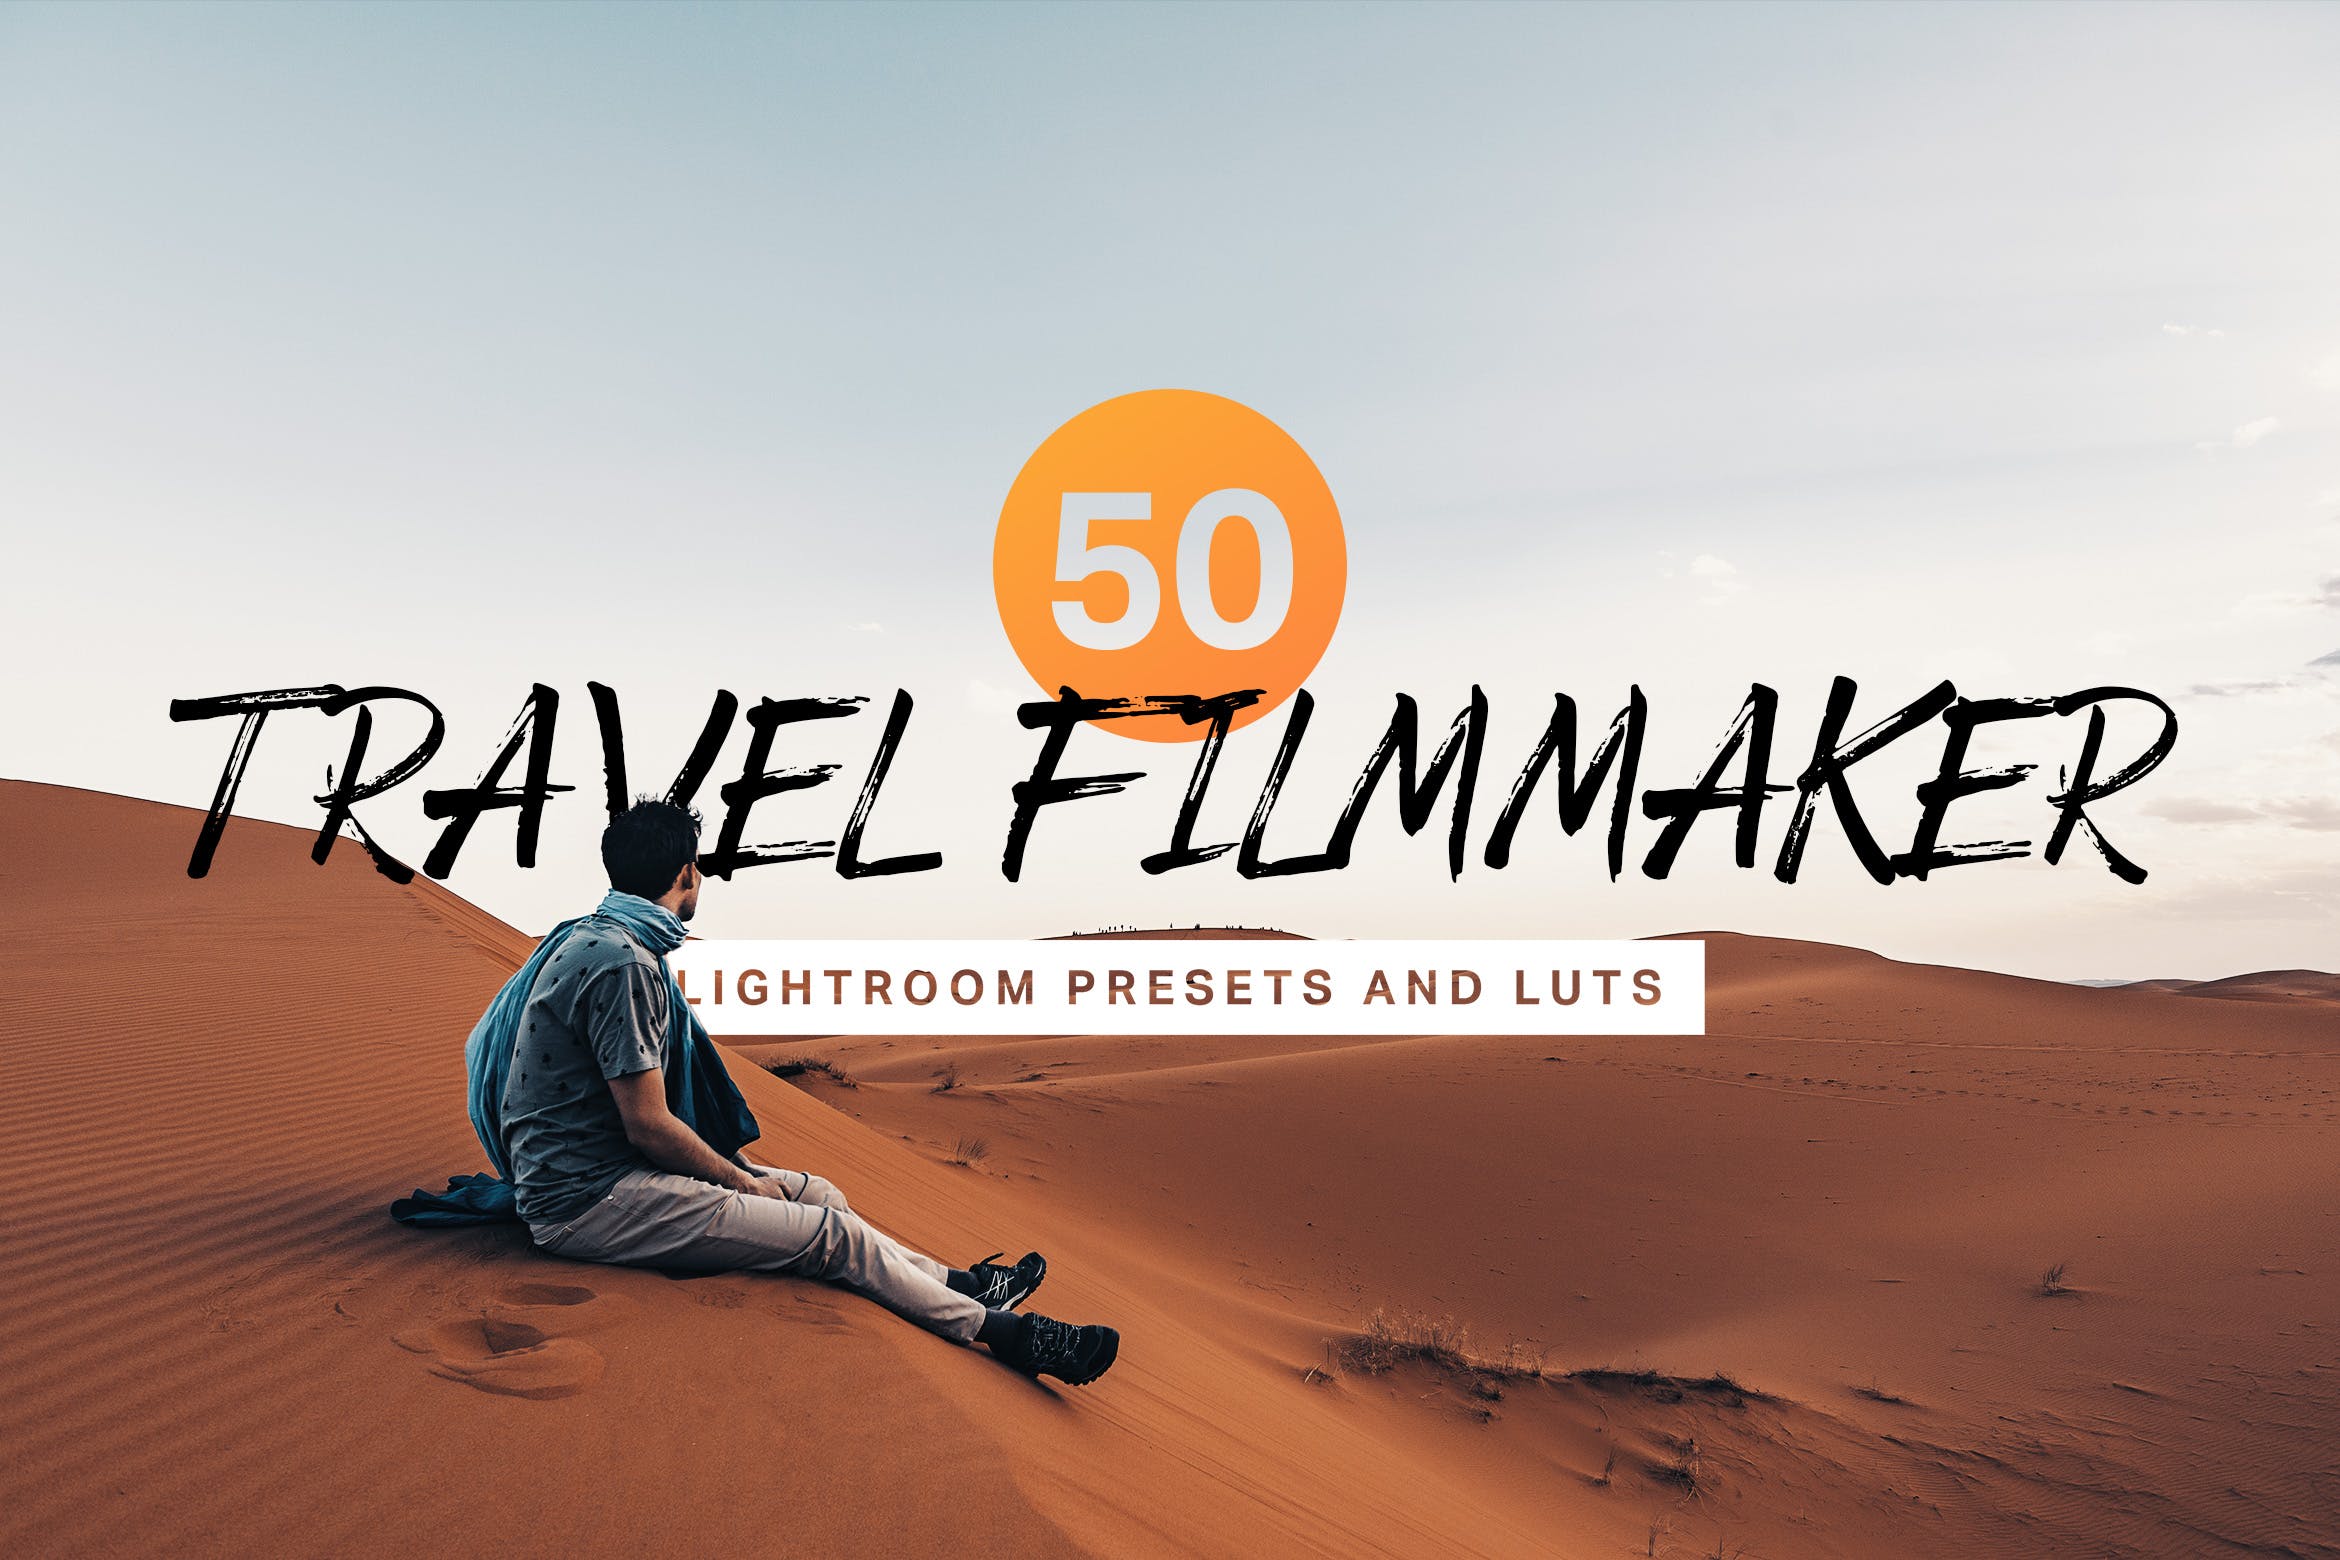 50款旅行照片电影色调滤镜16设计素材网精选LR预设 50 Travel Filmmaker Lightroom Presets and LUTs插图